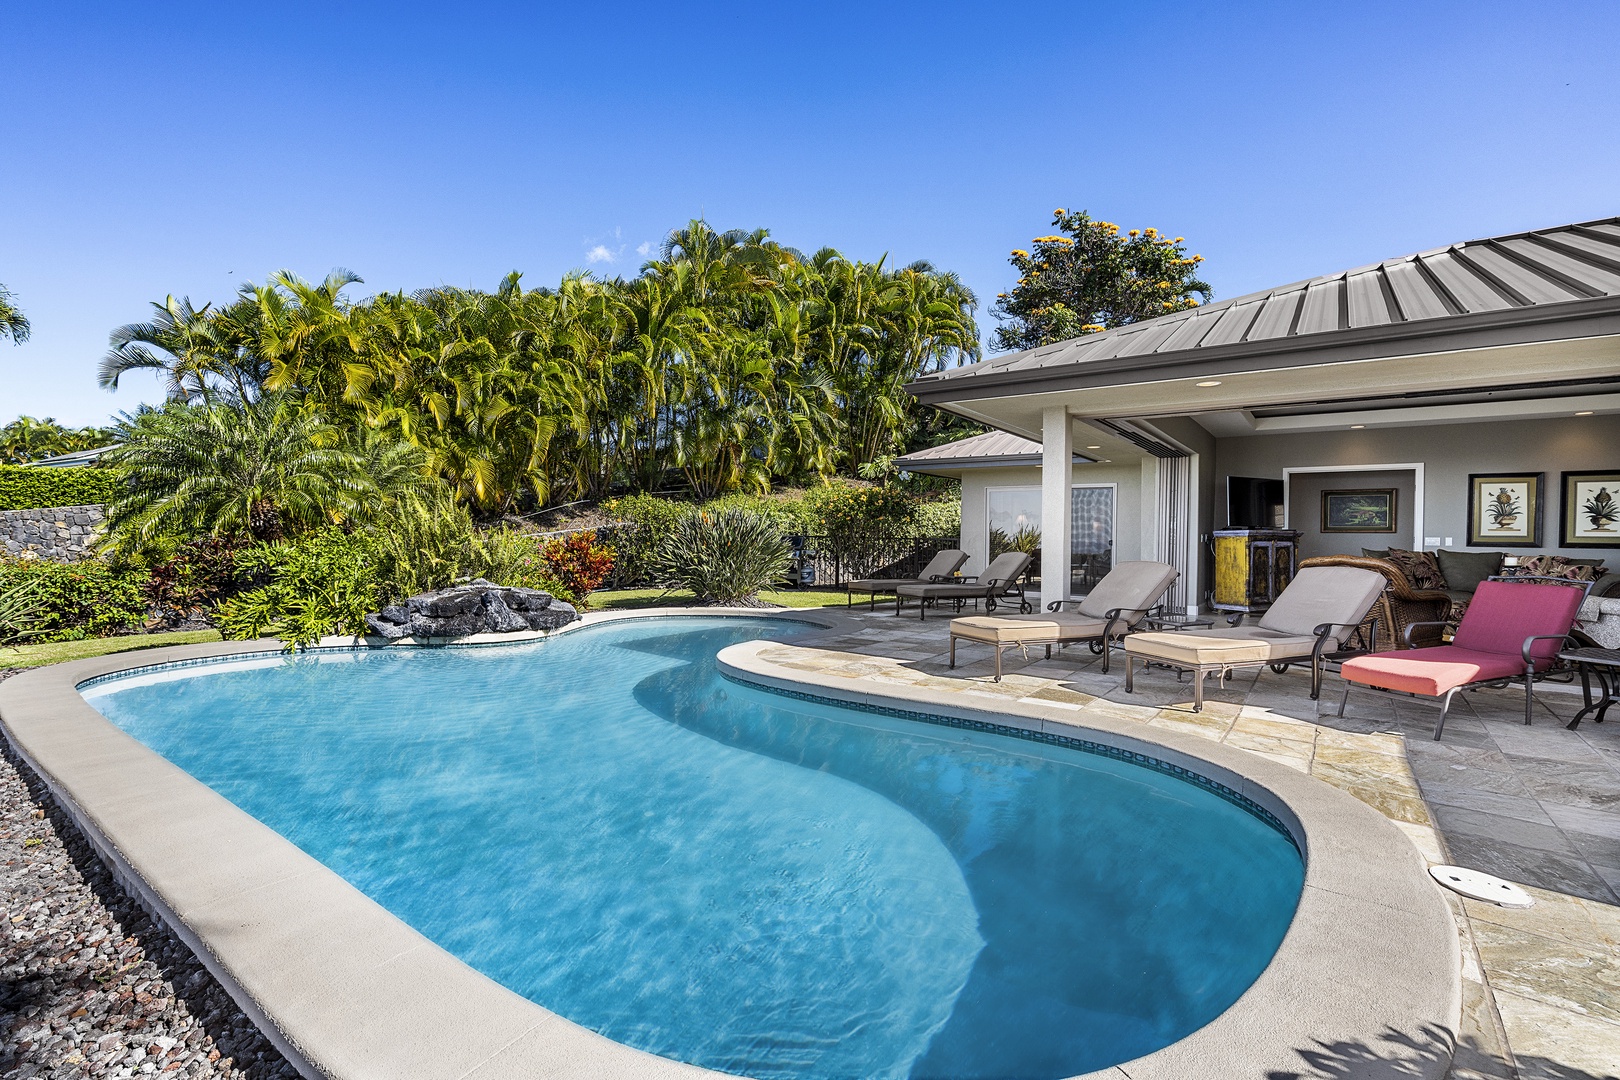 Kailua Kona Vacation Rentals, Hale Aikane - Solar heated pool!